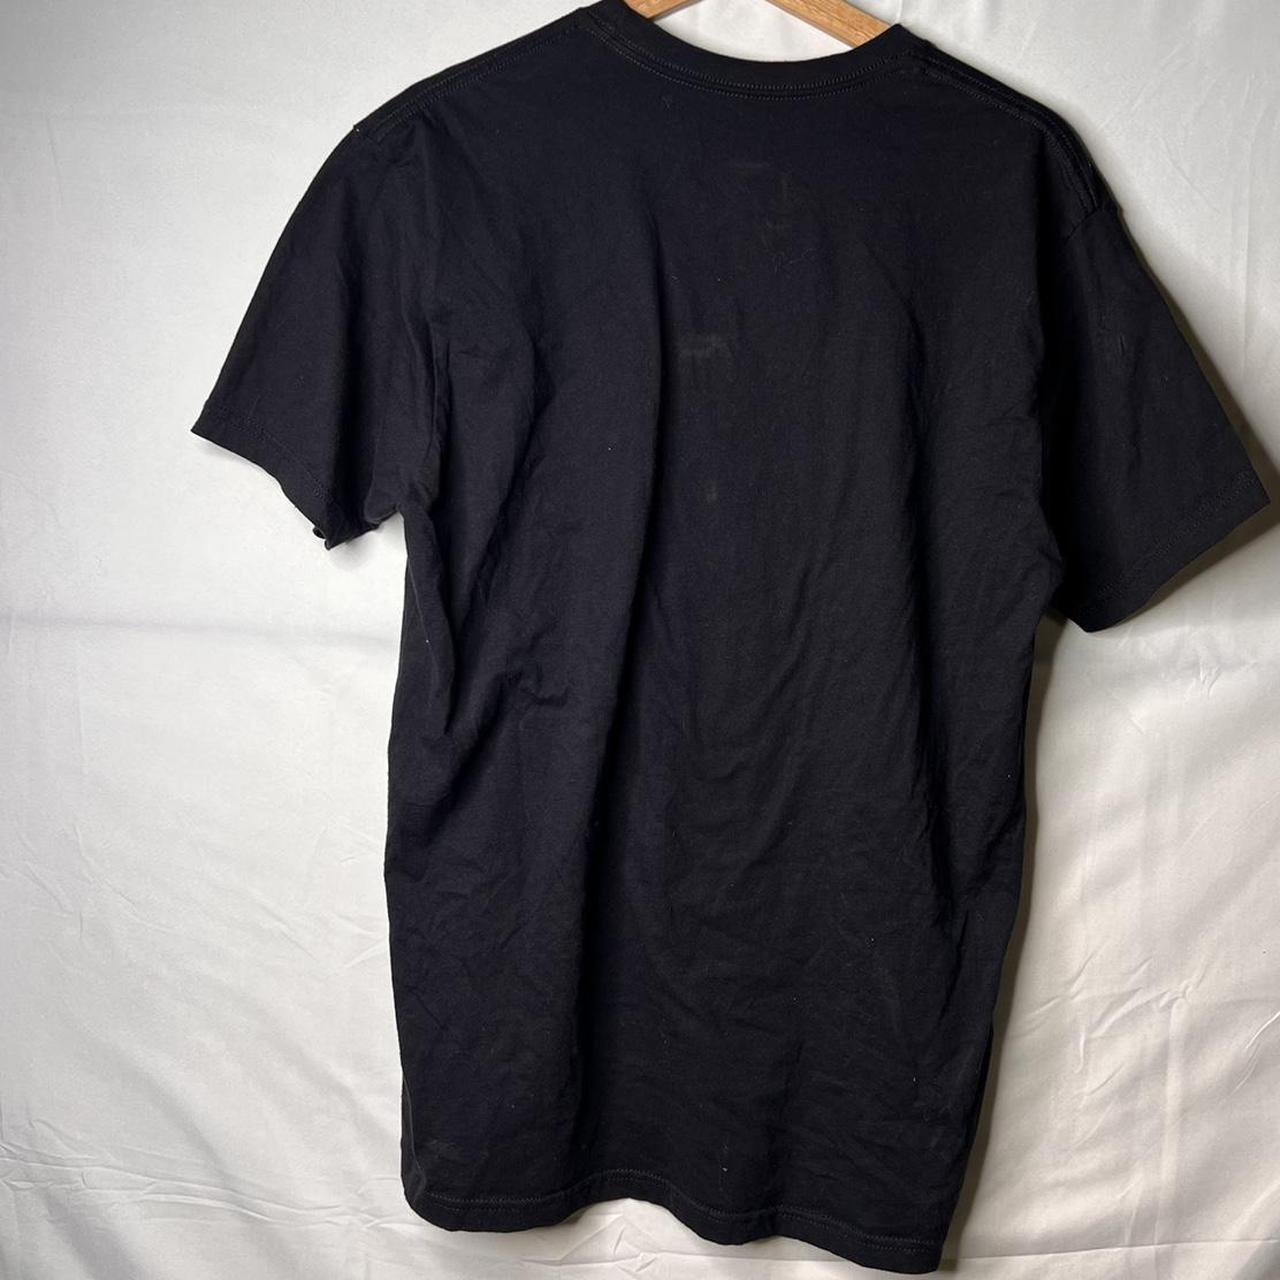 Product Image 2 - Danny Duncan Virginity Rocks T-Shirt

Size